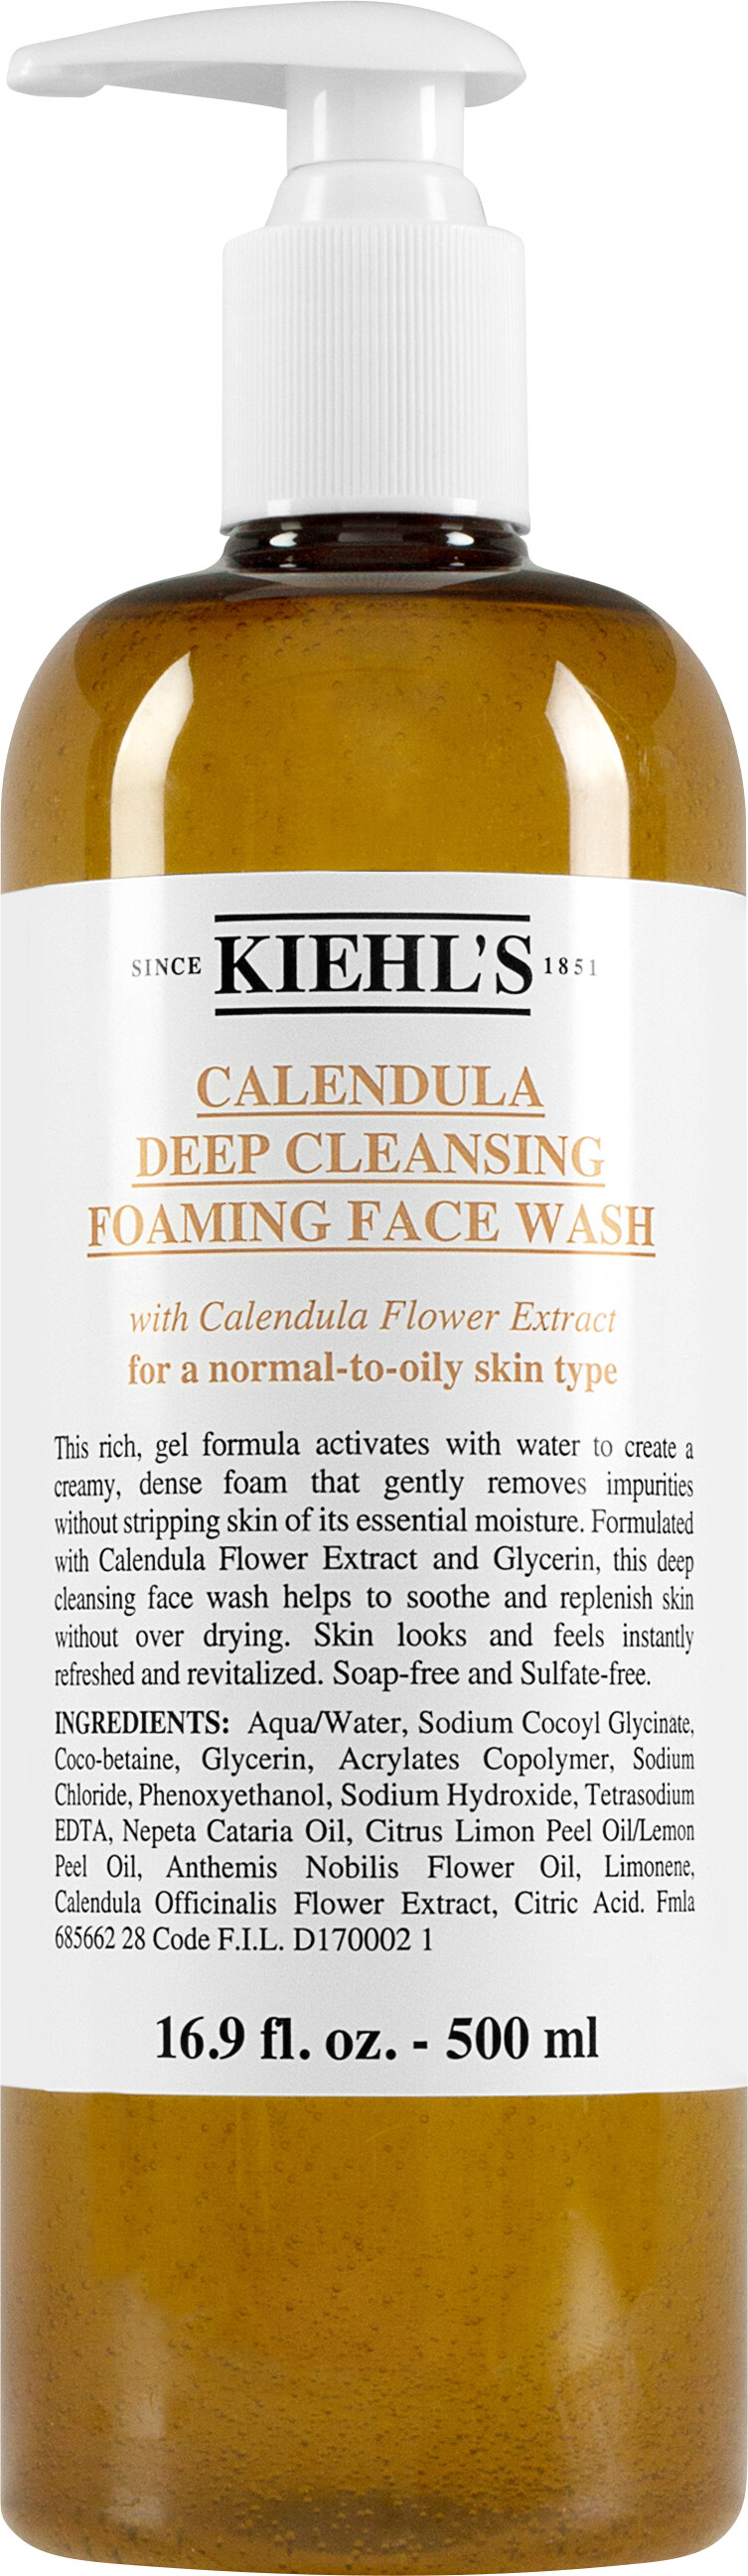 Kiehl's Calendula Deep Cleansing Foaming Face Wash 500ml